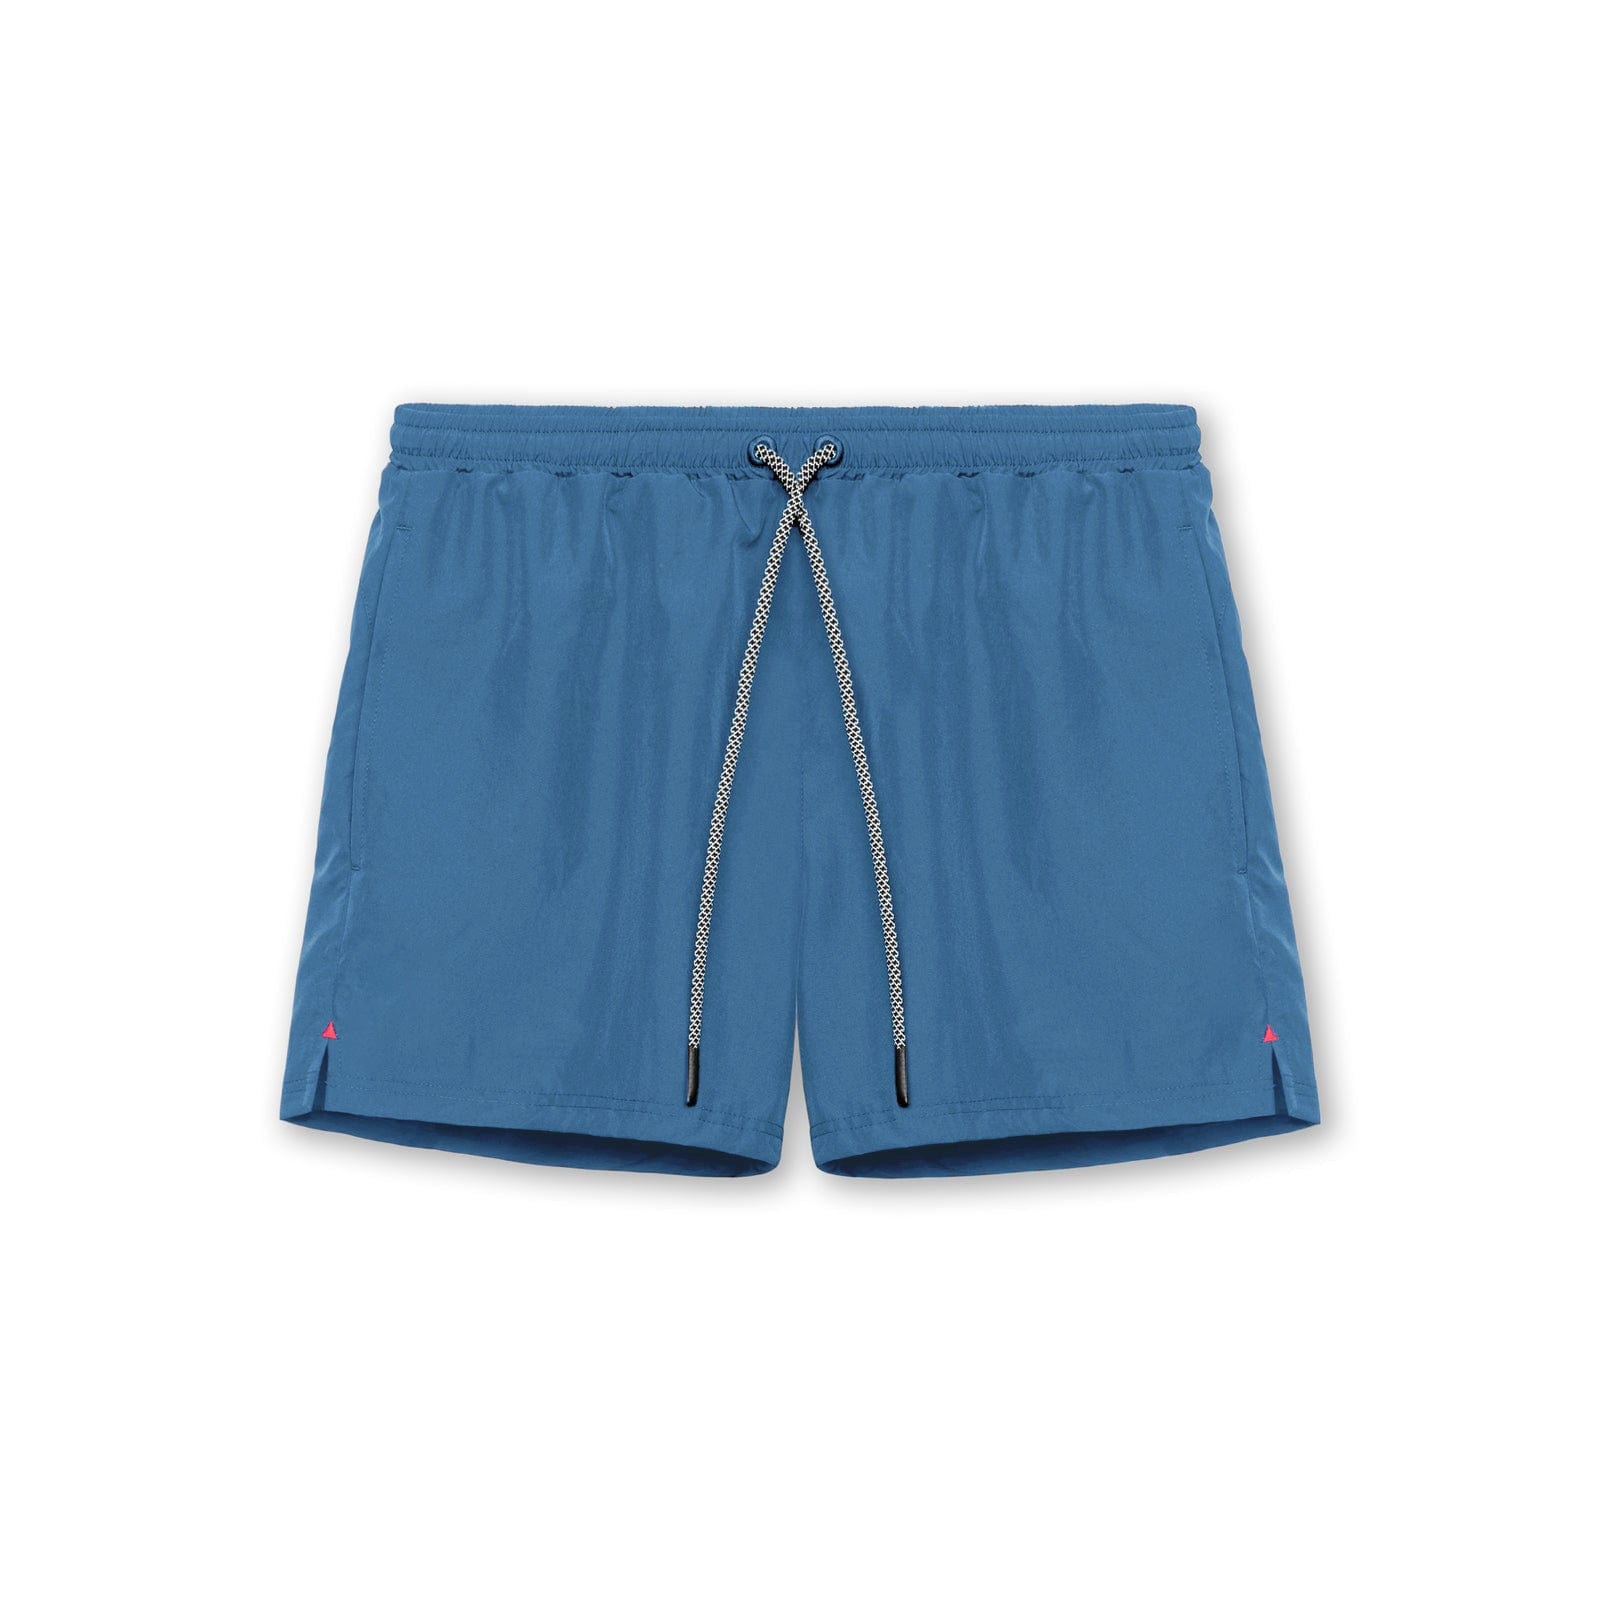 ALLRJ Shorts Light Plate Light Blue / L Muscle Workout Summer Sports Casual Basketball Men's Running Training Wear Shorts